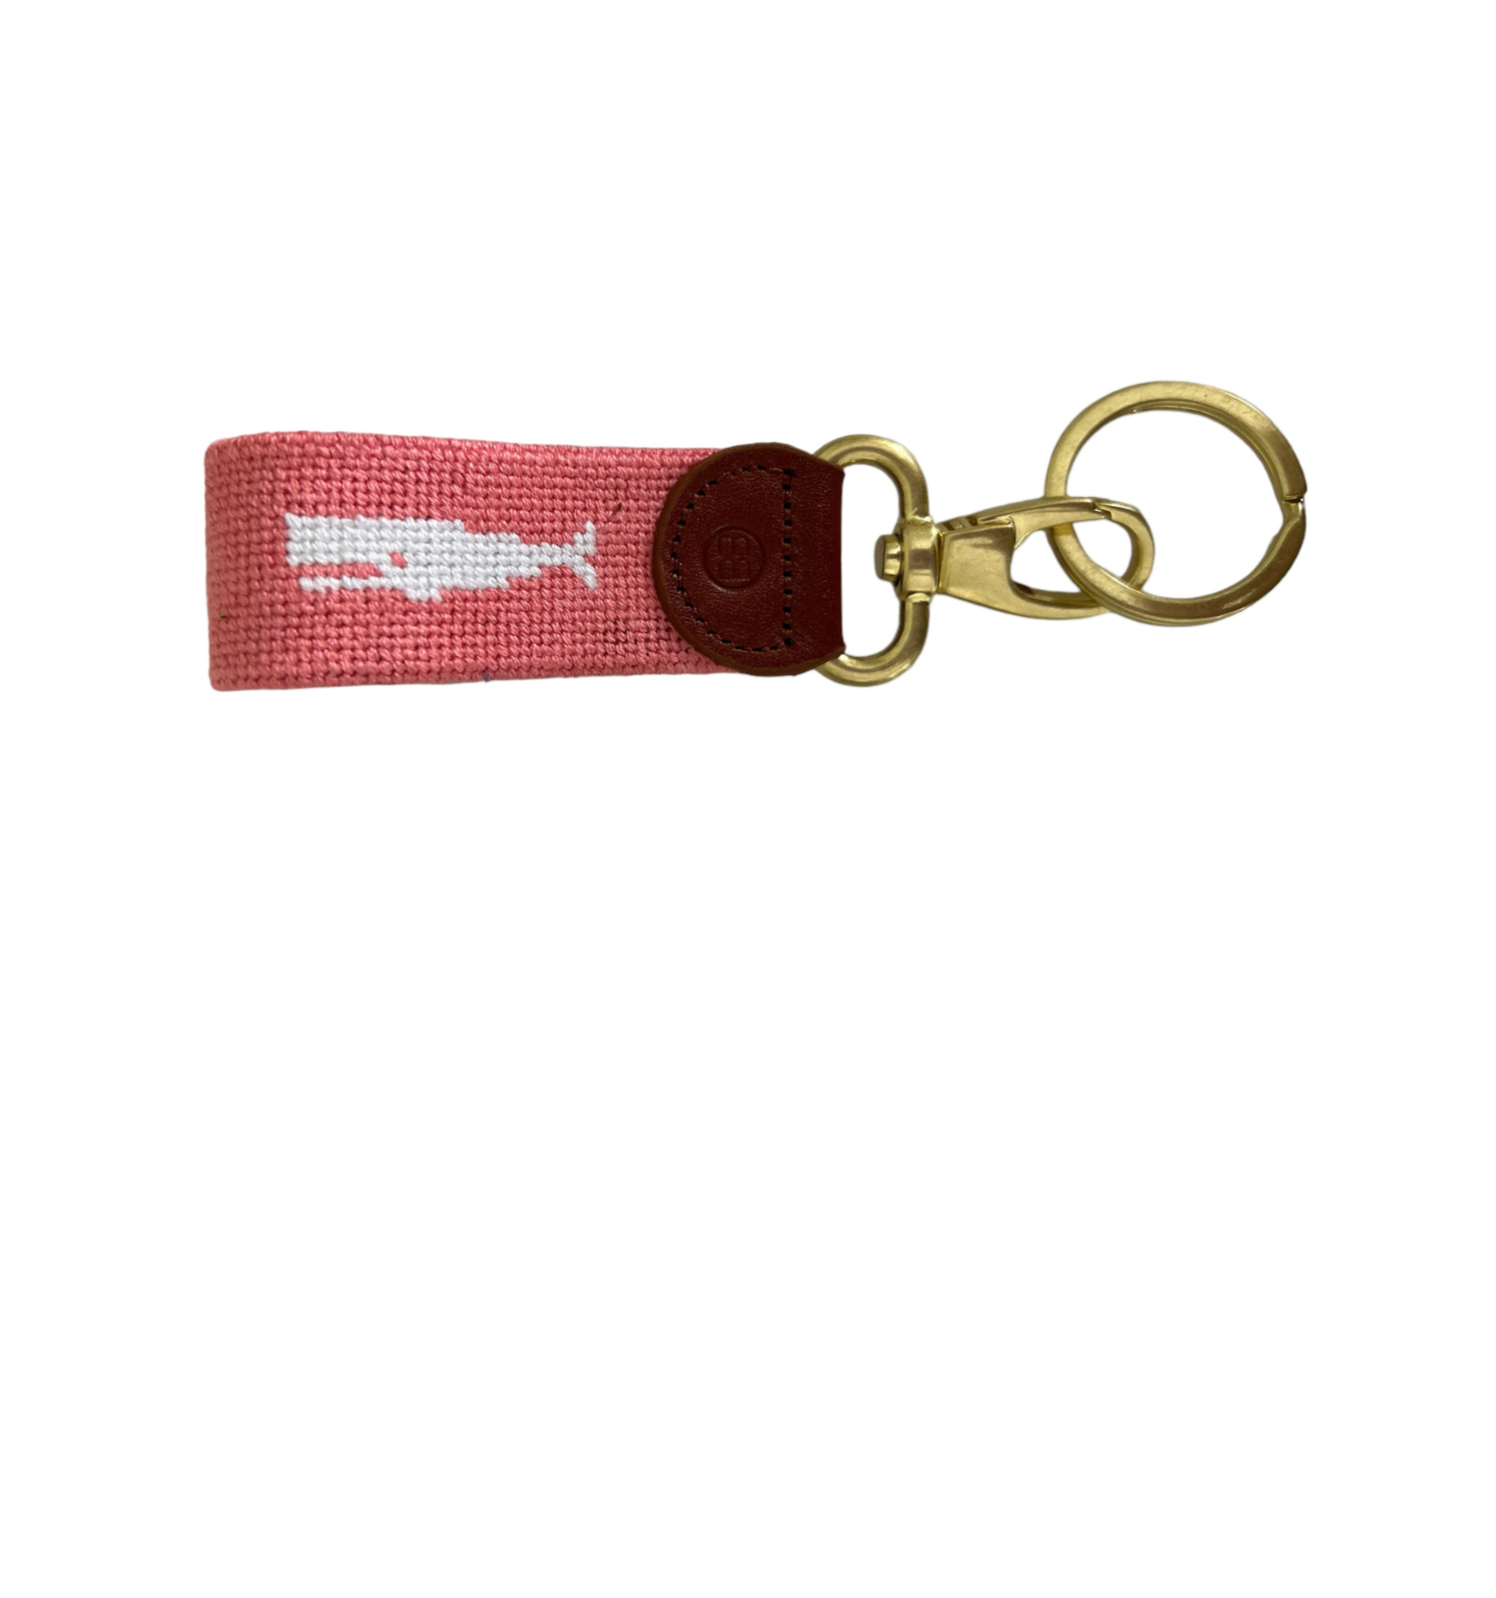 Needlepoint Key Fob - Pink Whale design / Baldwin Belts